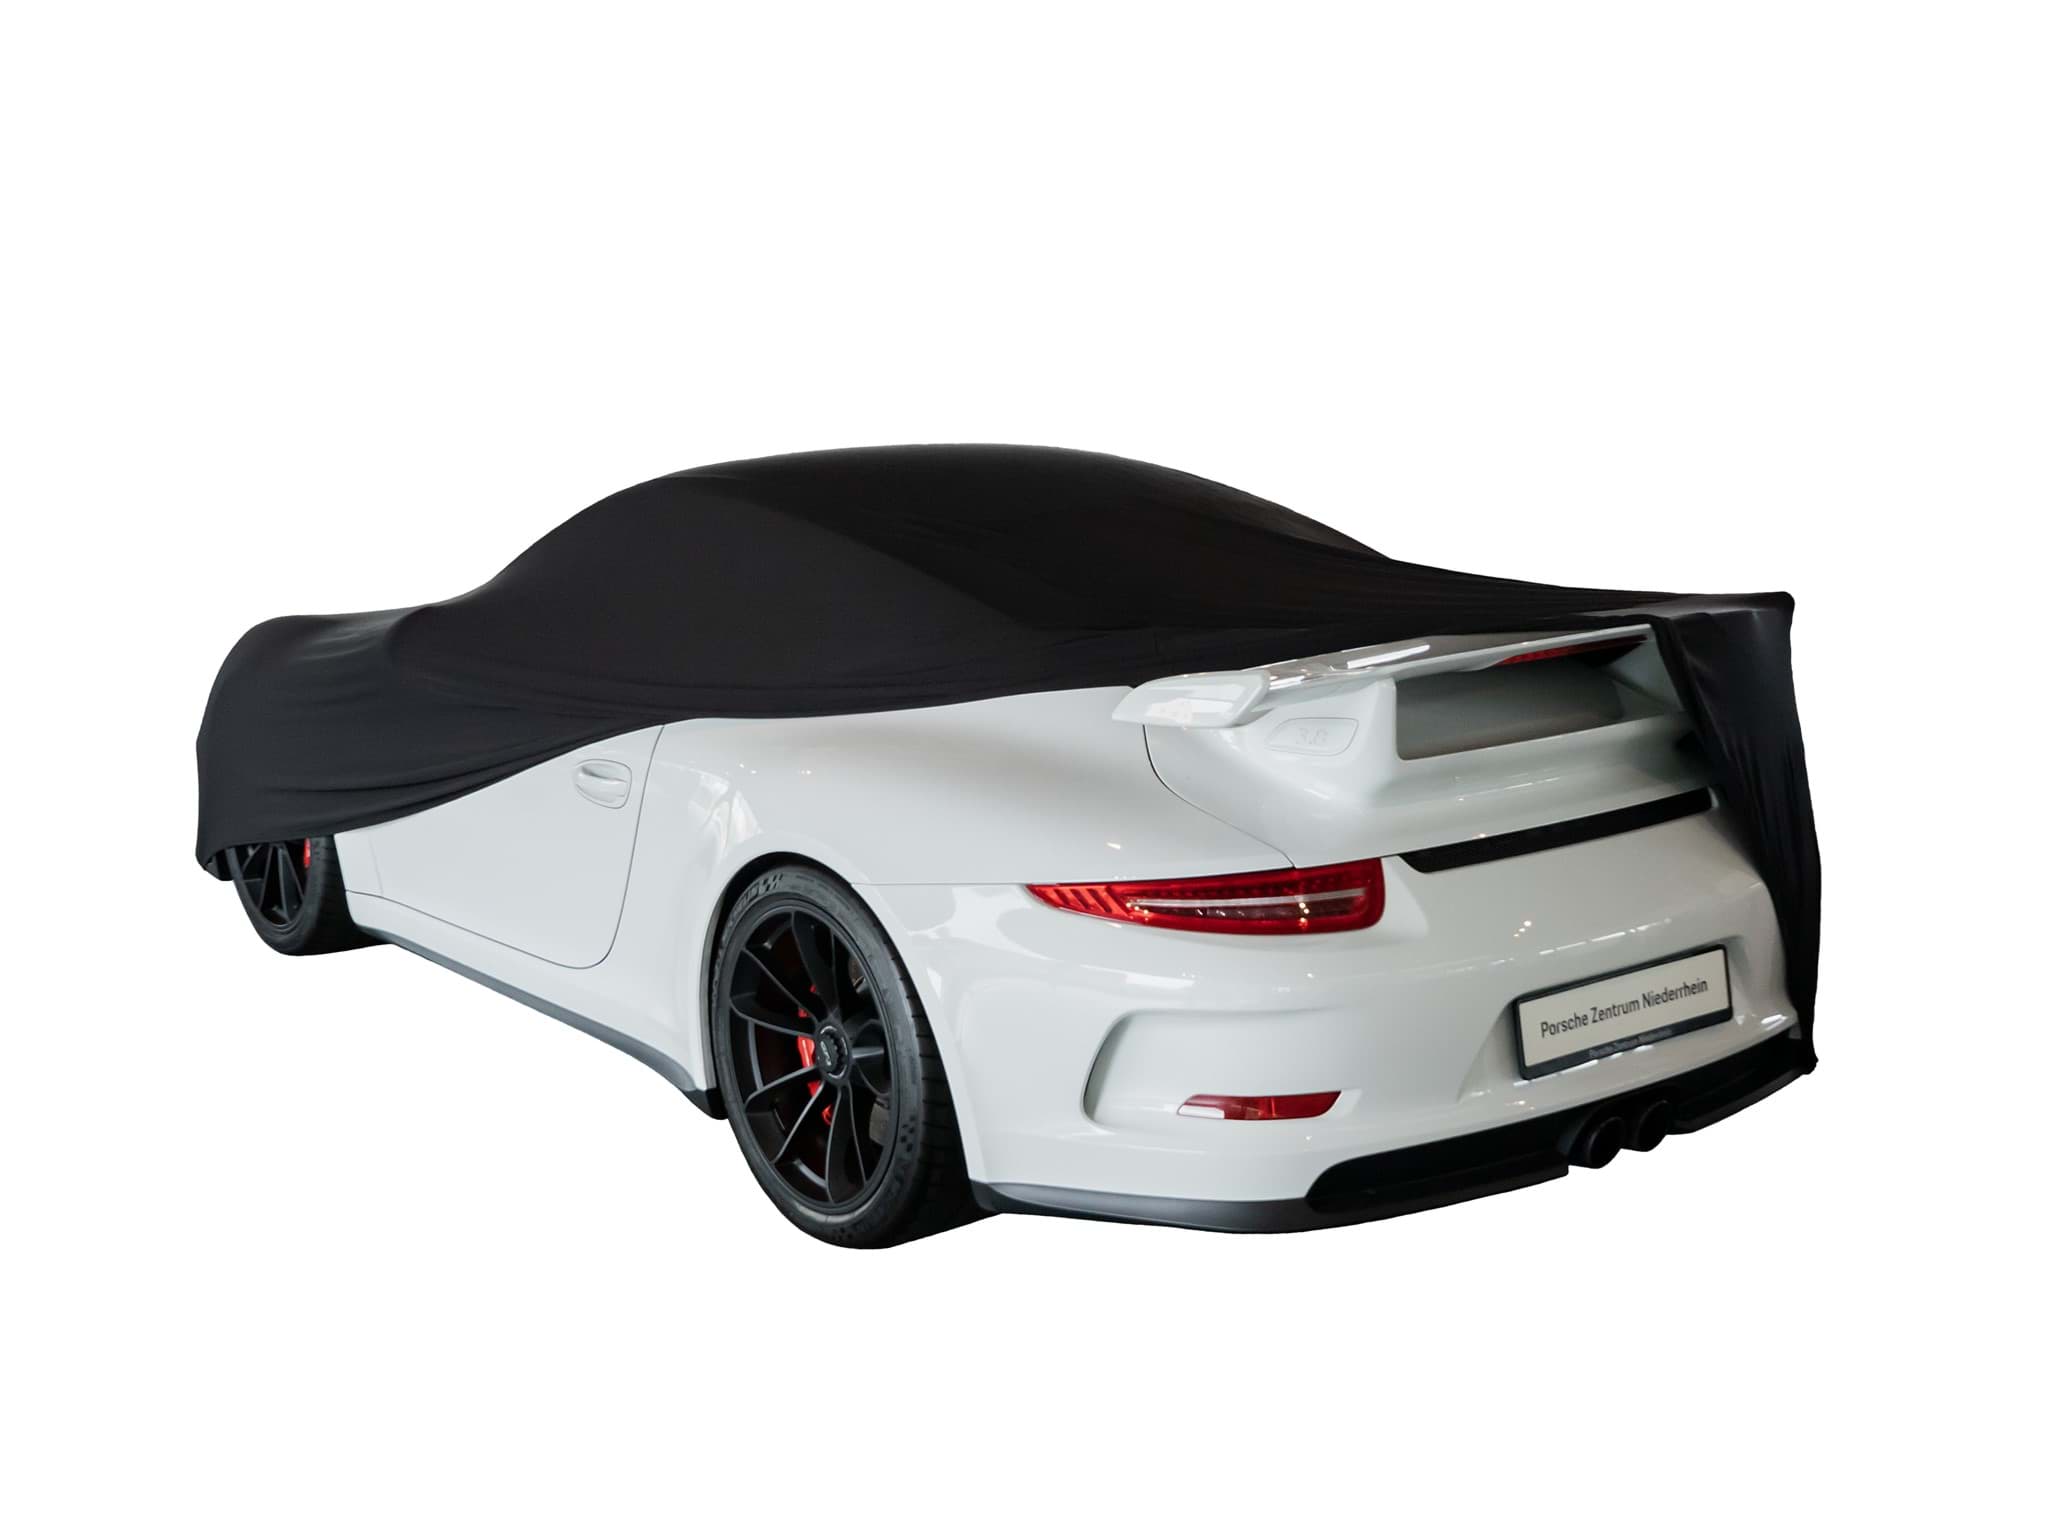 Car-e-Cover elegant formanpassend atmungsaktiv für den Innenbereich Farbe Silbergrau Autoschutzdecke Perfect Stretch 